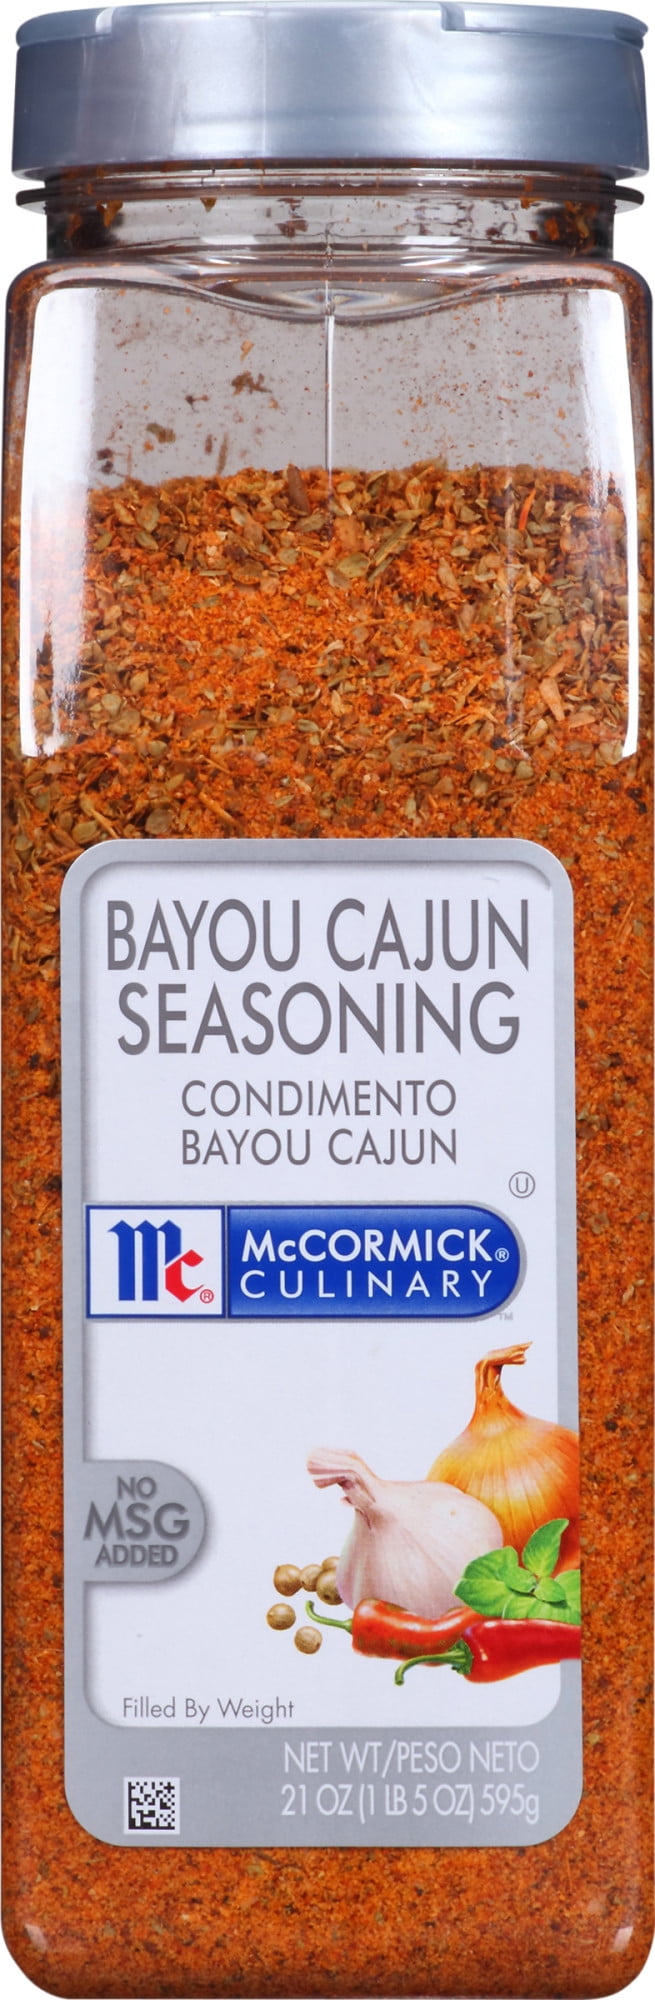 McCormick Cajun Seasoning 141g.